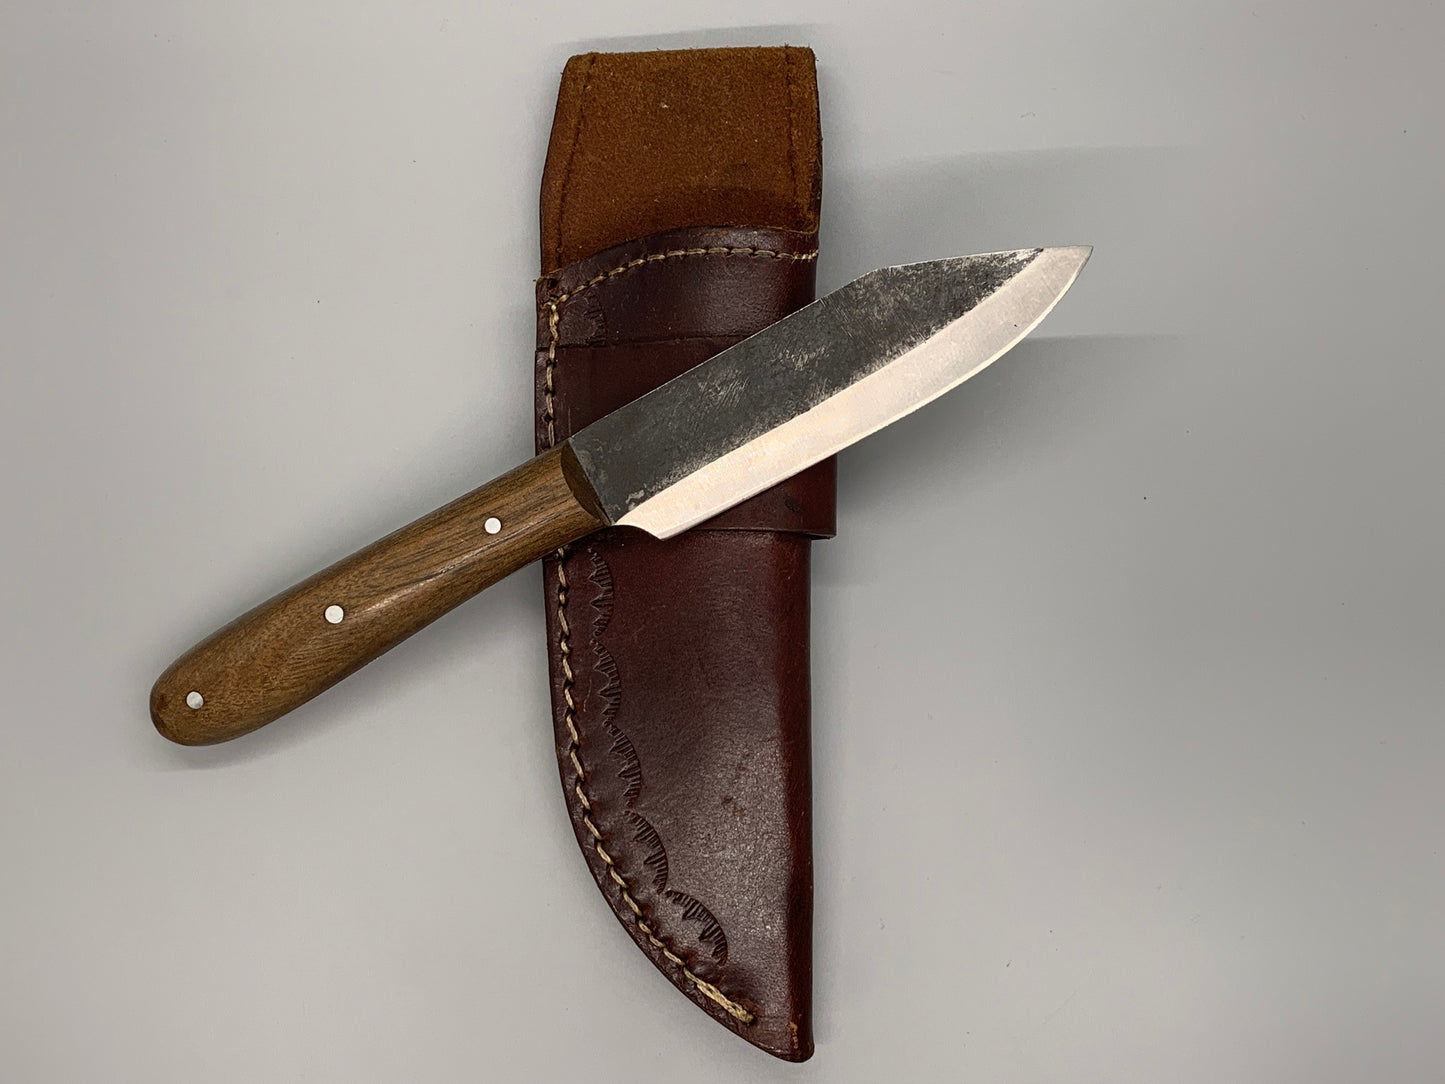 FX-072 Maple handle Skinner knife w/Carbon Steel Blade